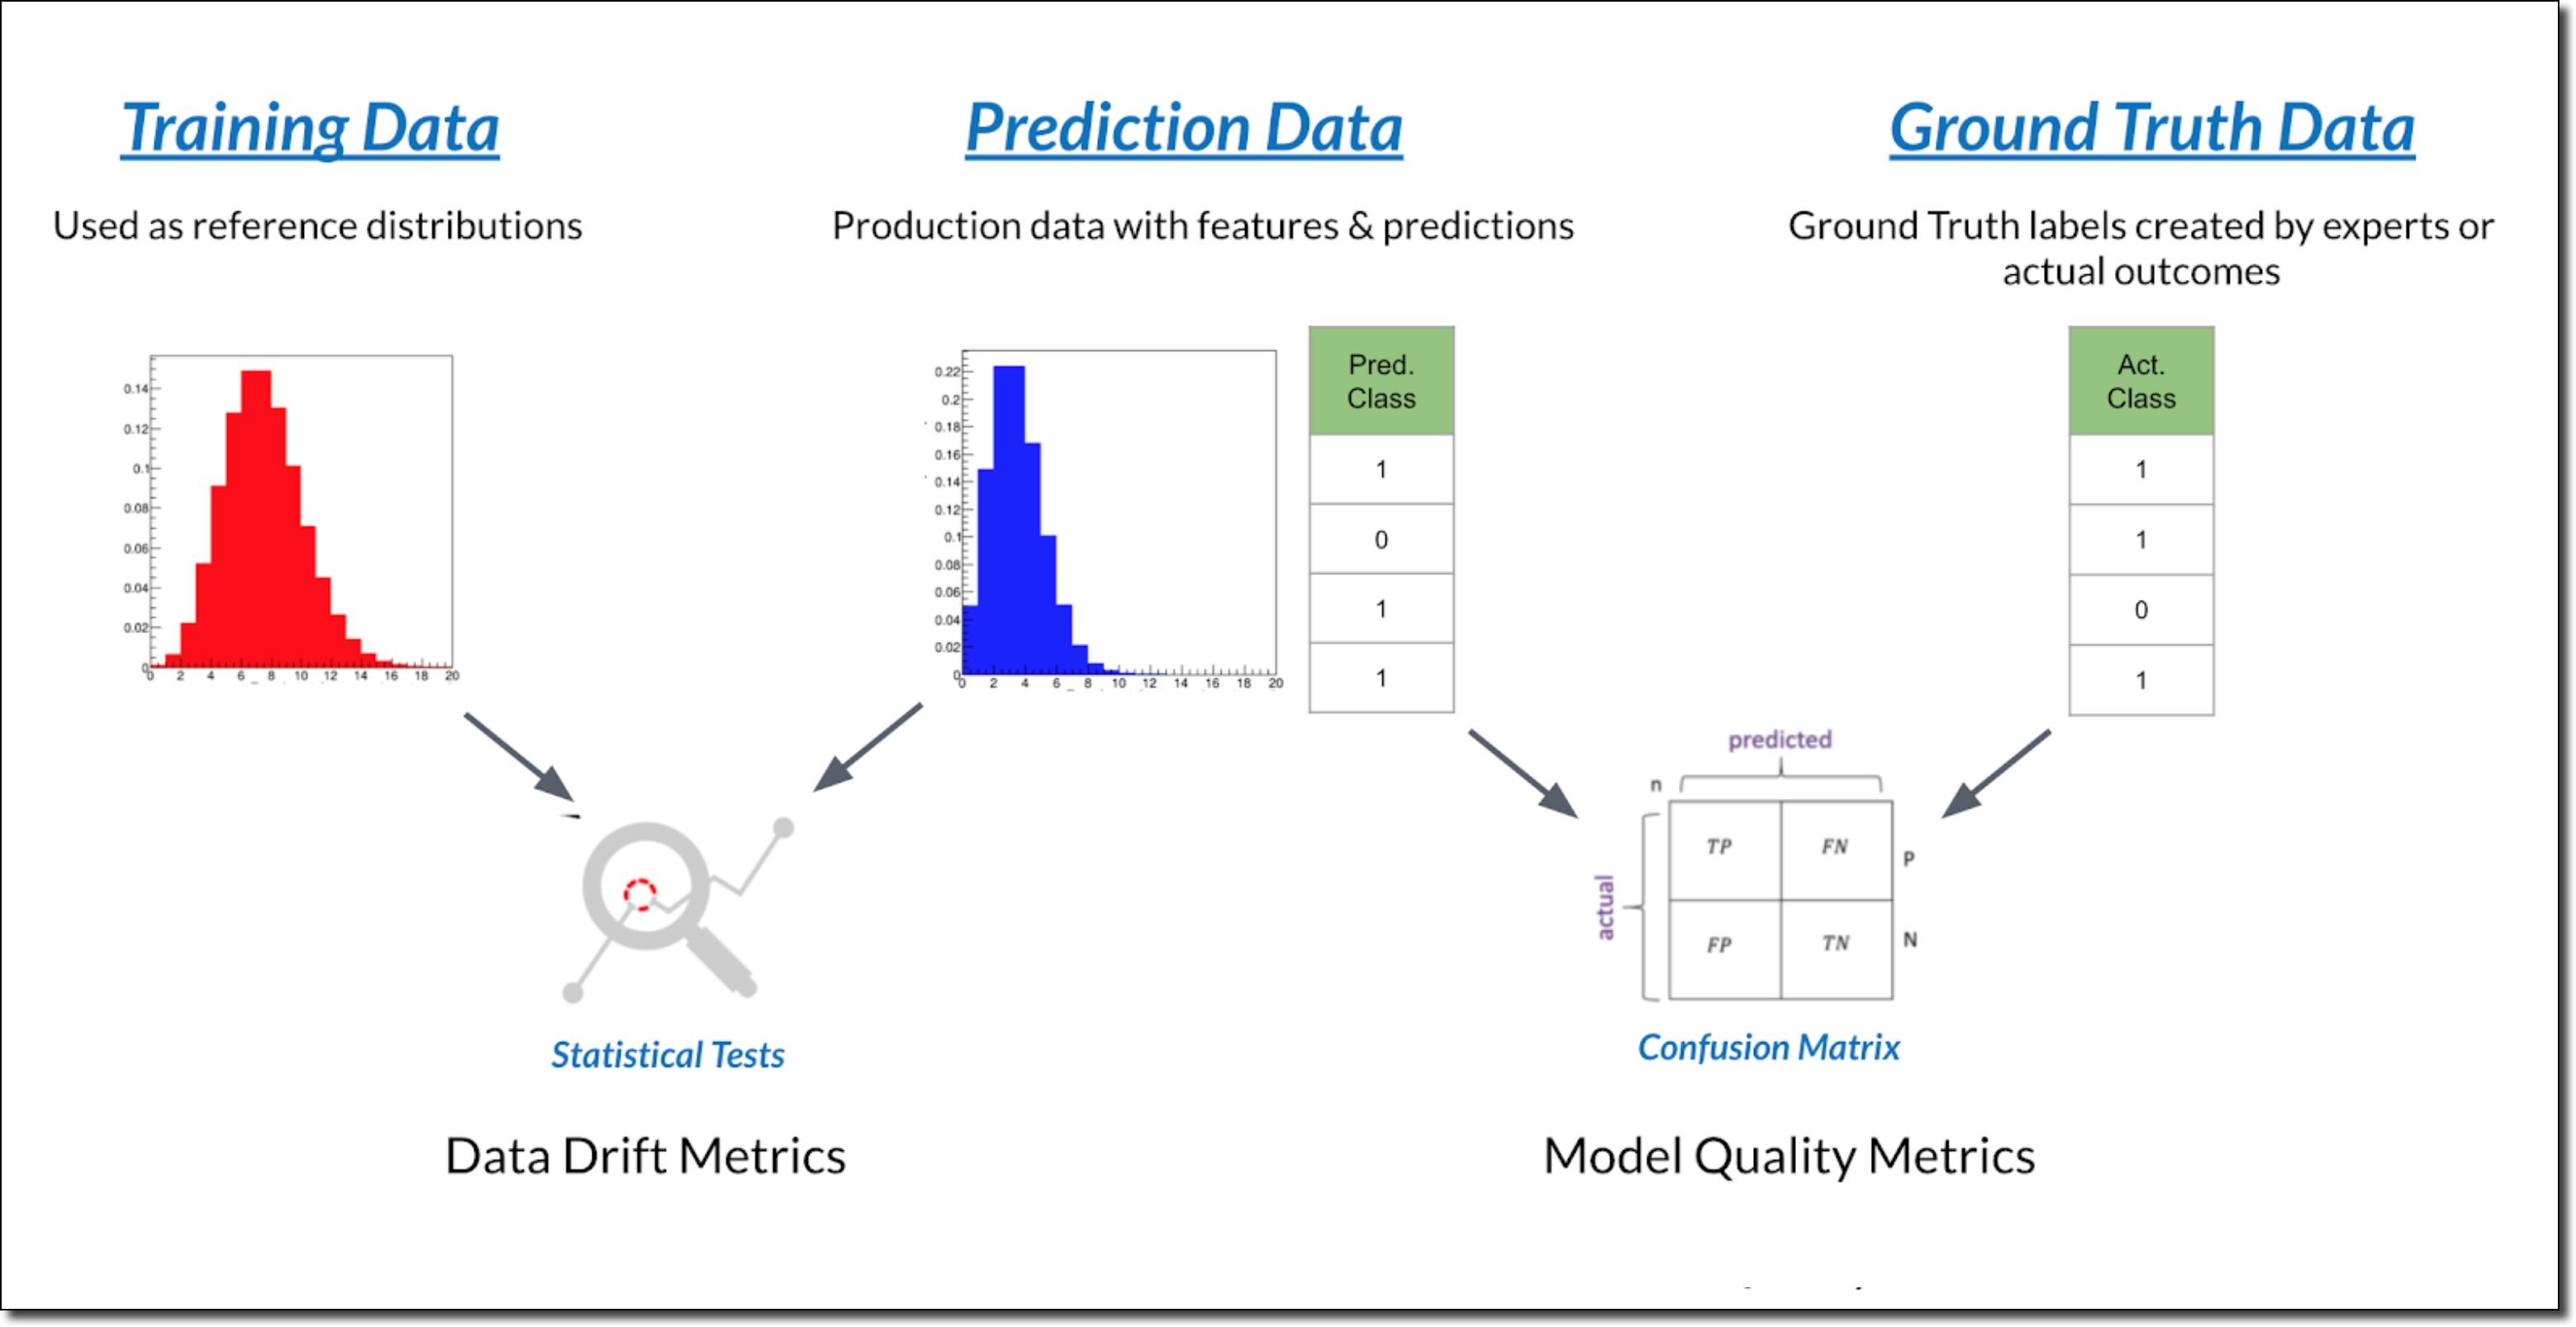 Data drift metrics compare training data and prediction data